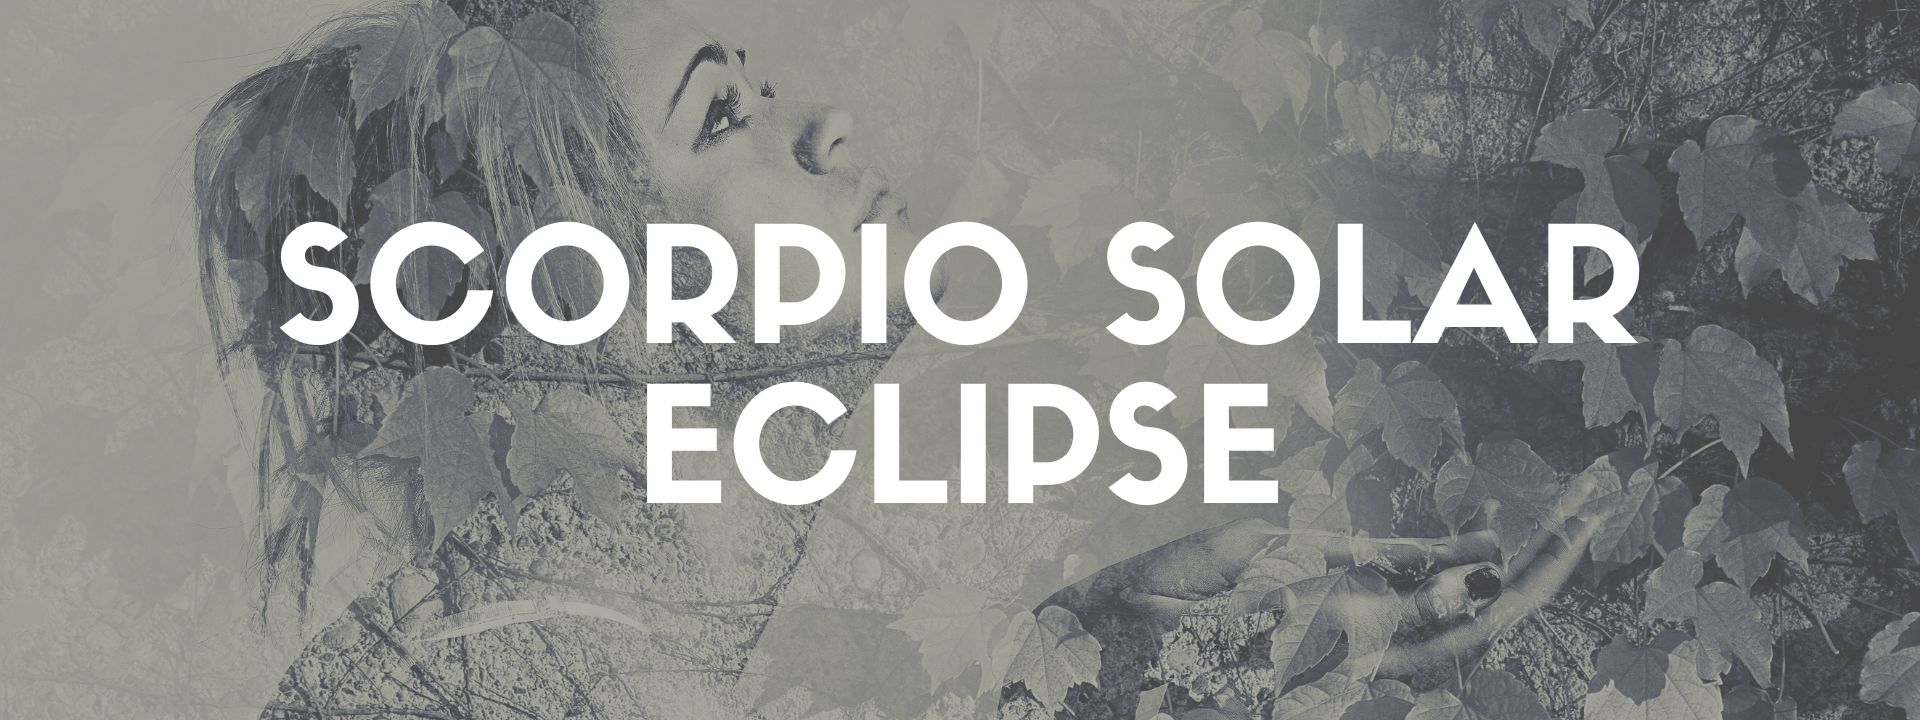 Scorpio Solar Eclipse 2022 - The Dark Pixie Astrology